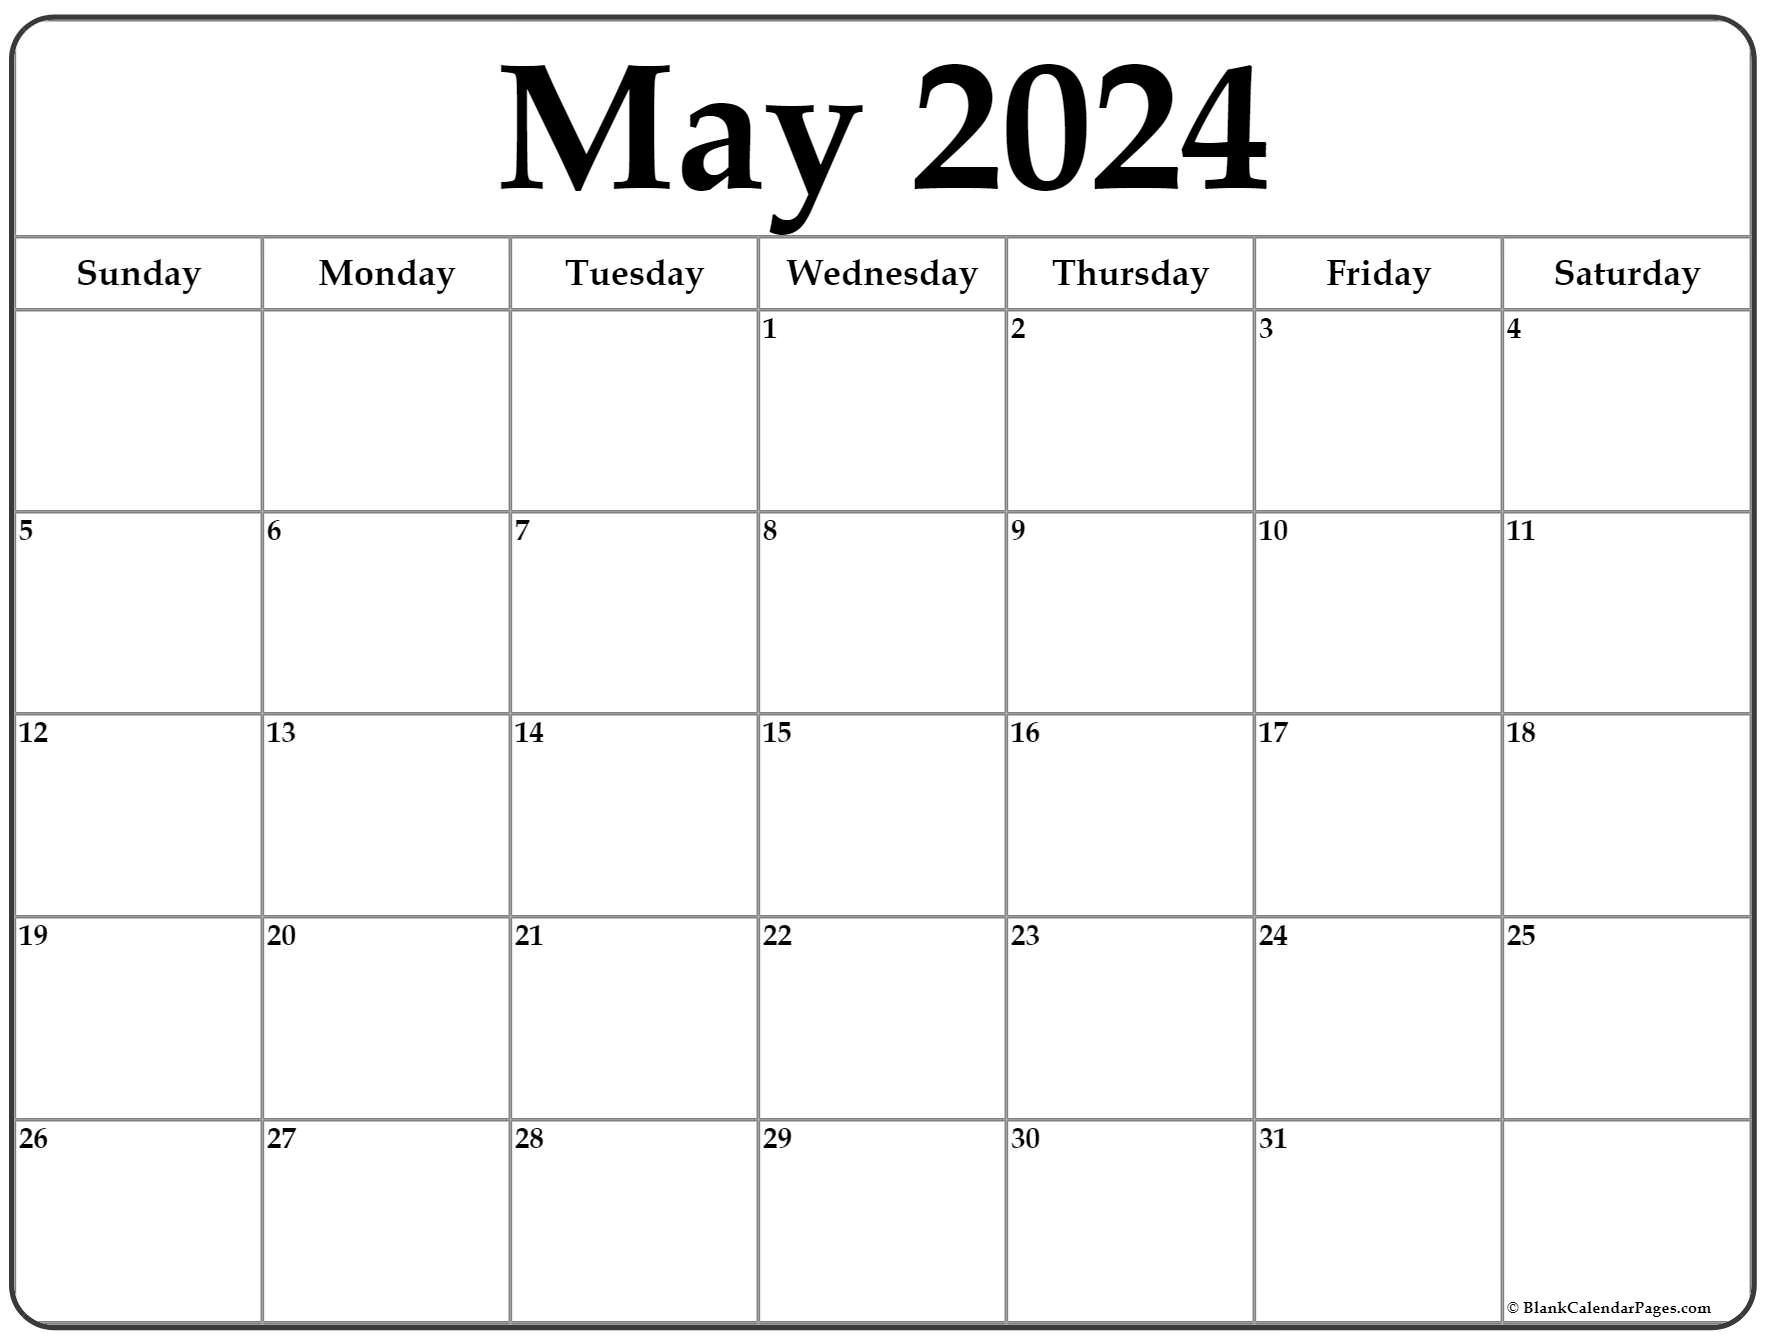 May 2024 Calendar | Free Printable Calendar with Free Printable Blank May Calendar 2024